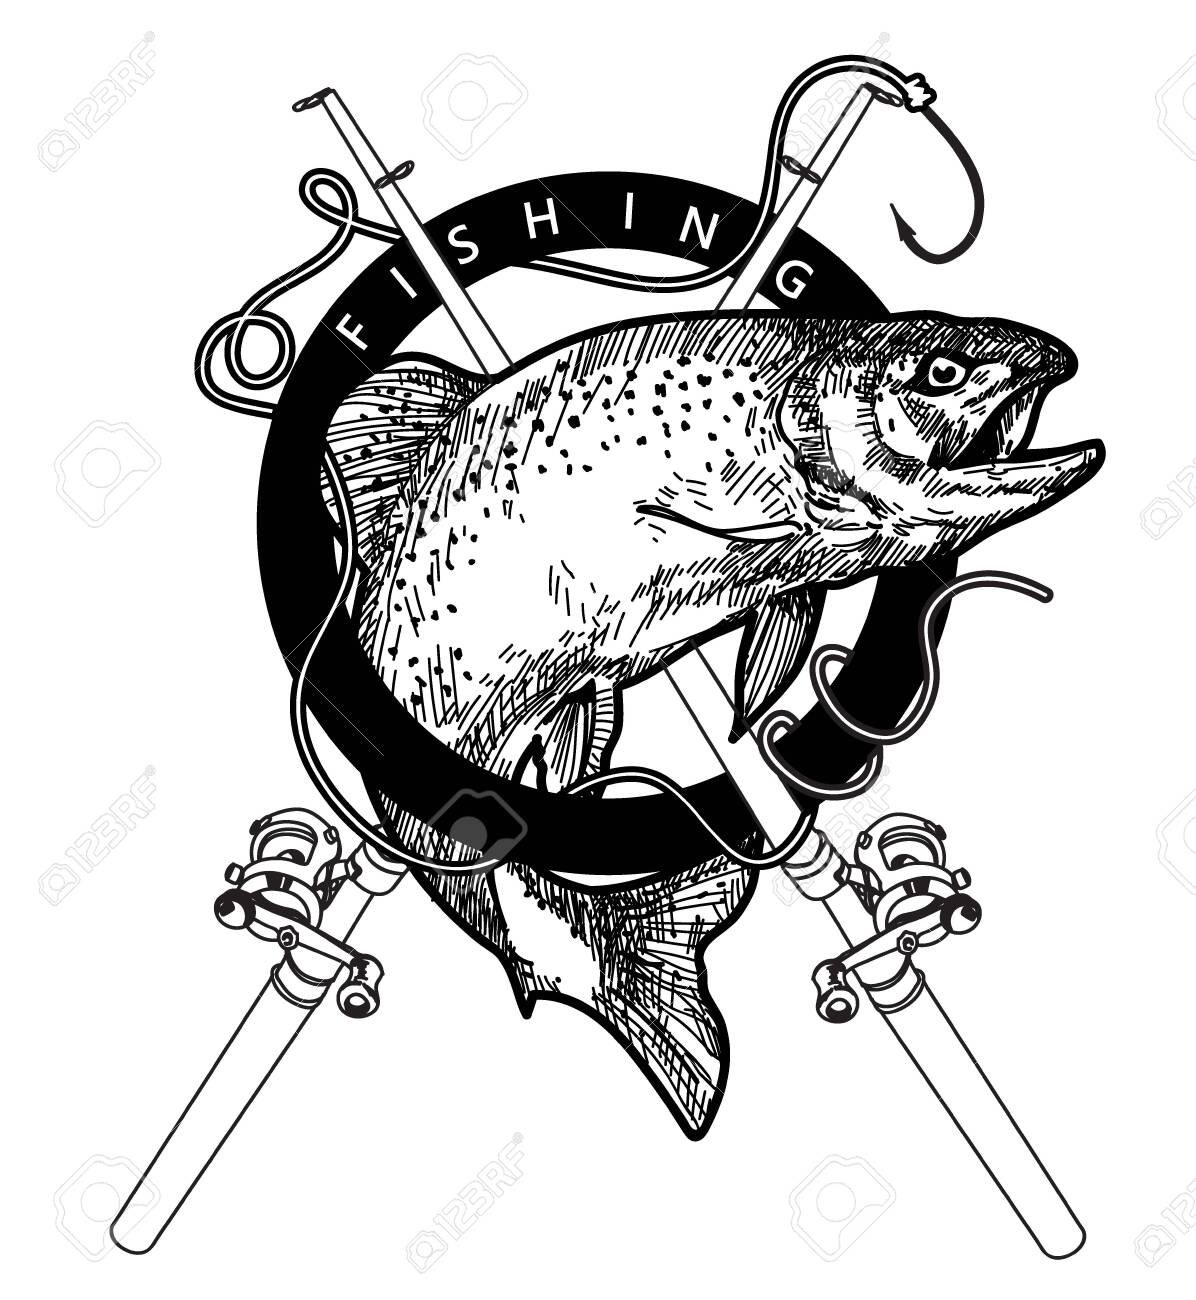 Рыболовная графика